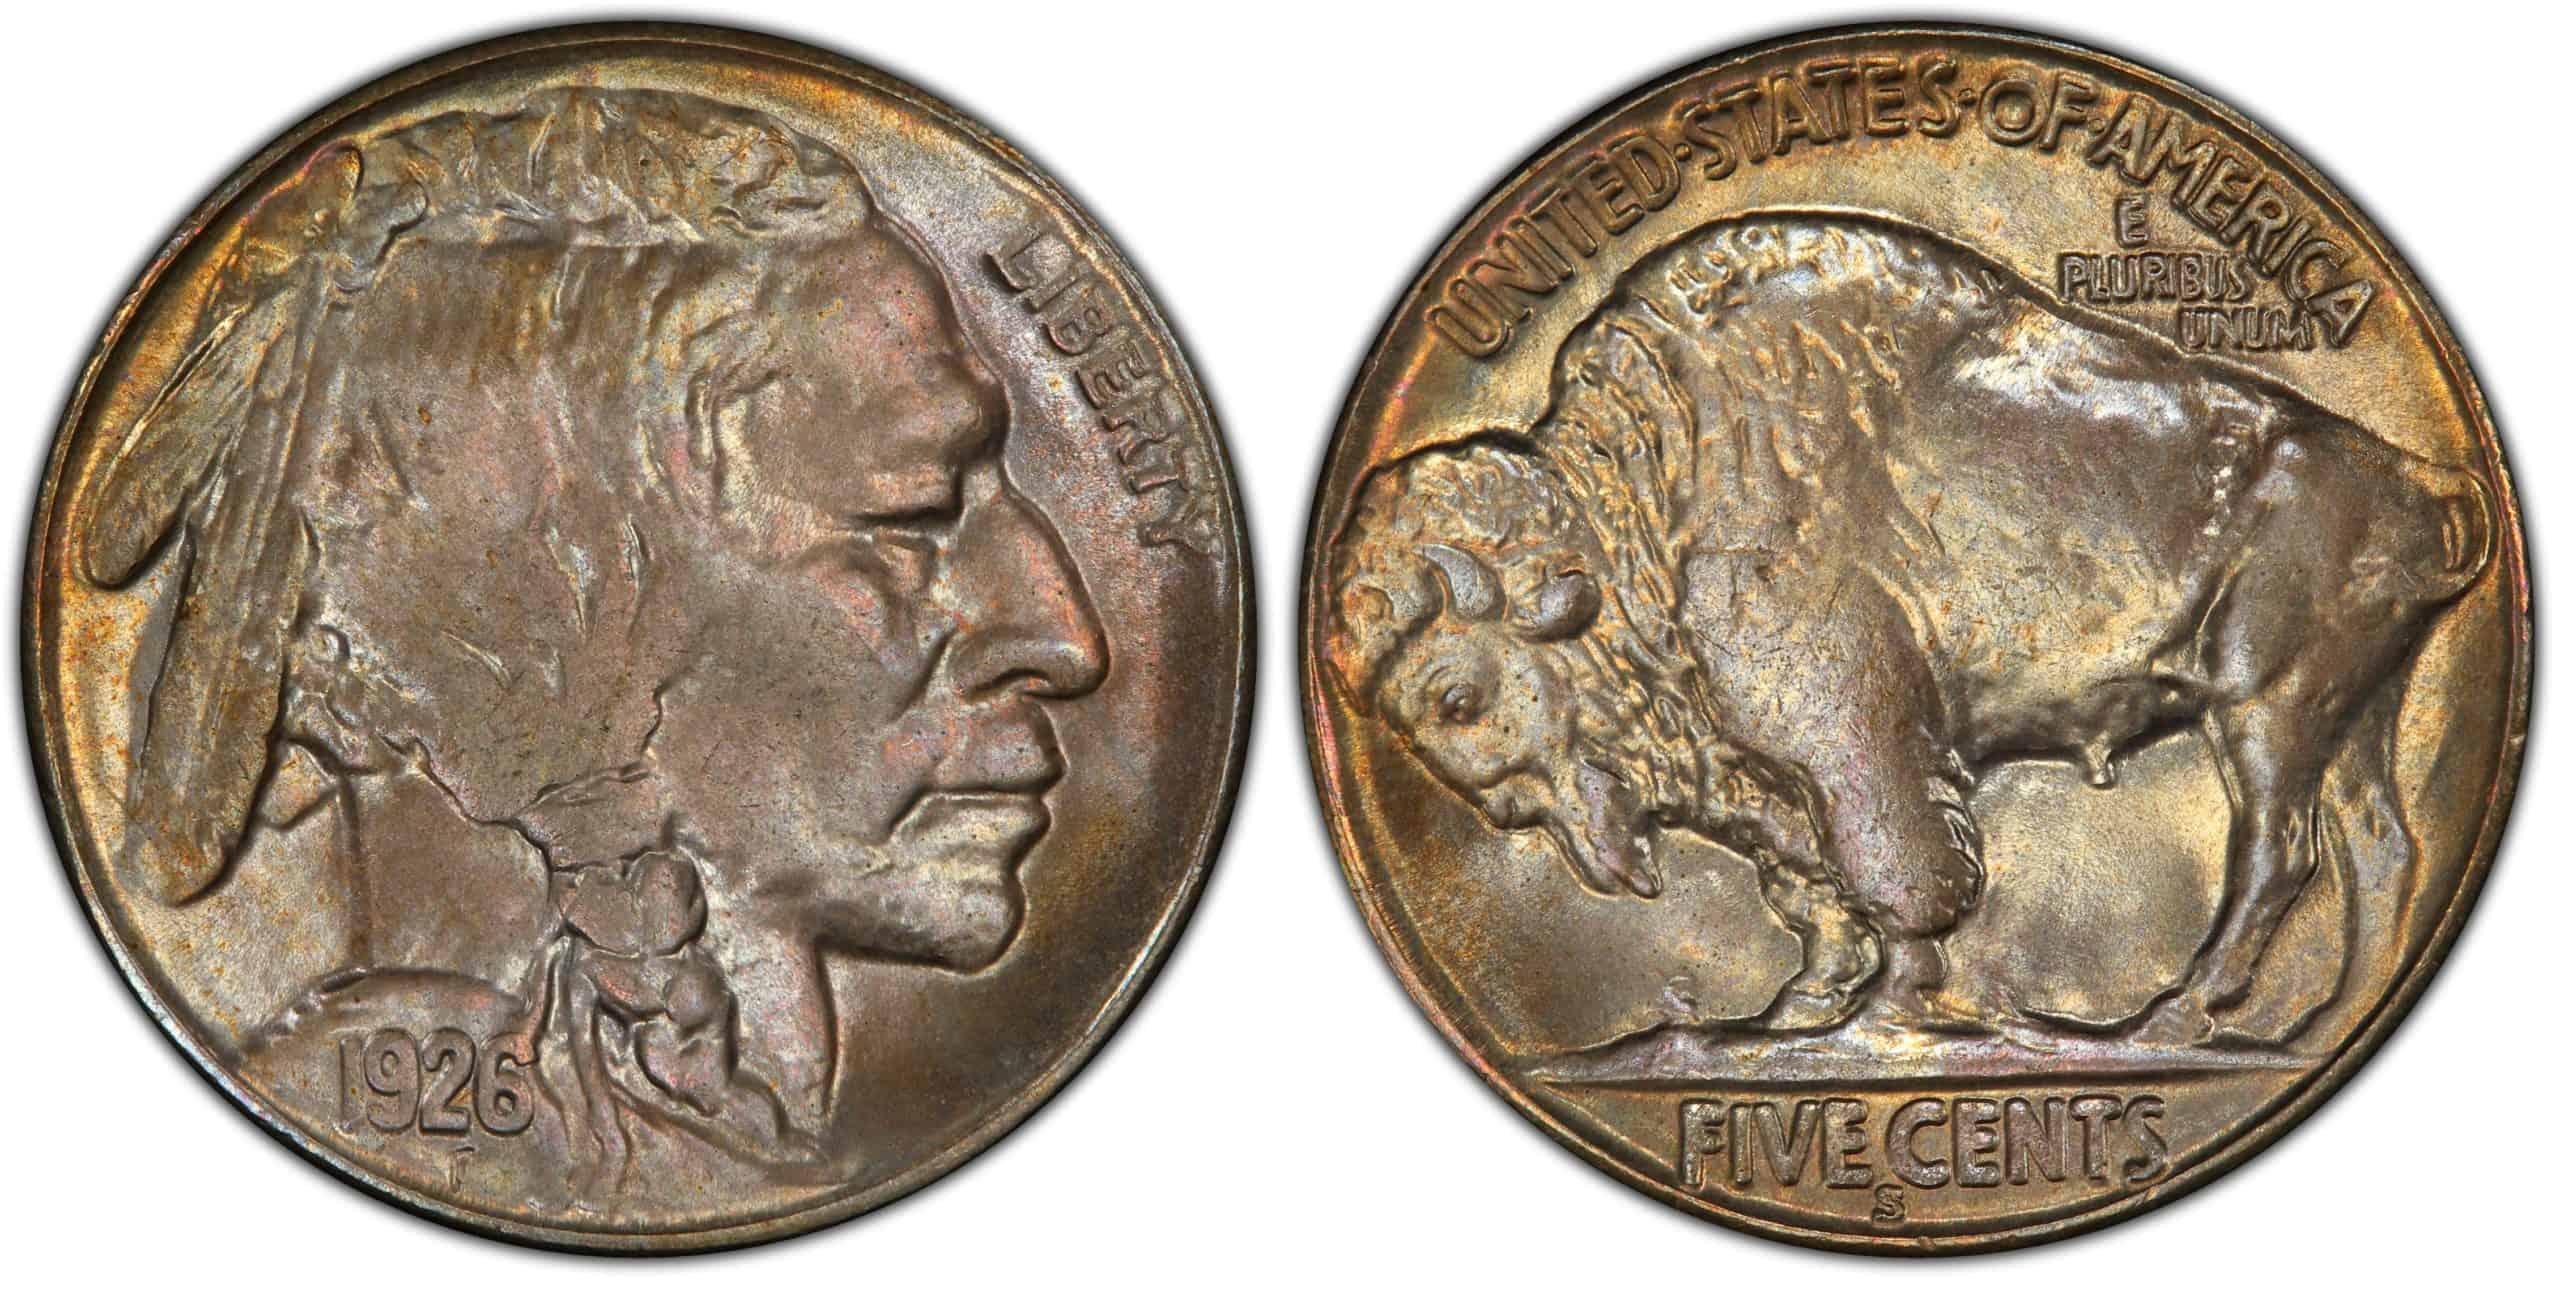 1926 S MS 66 Buffalo nickel